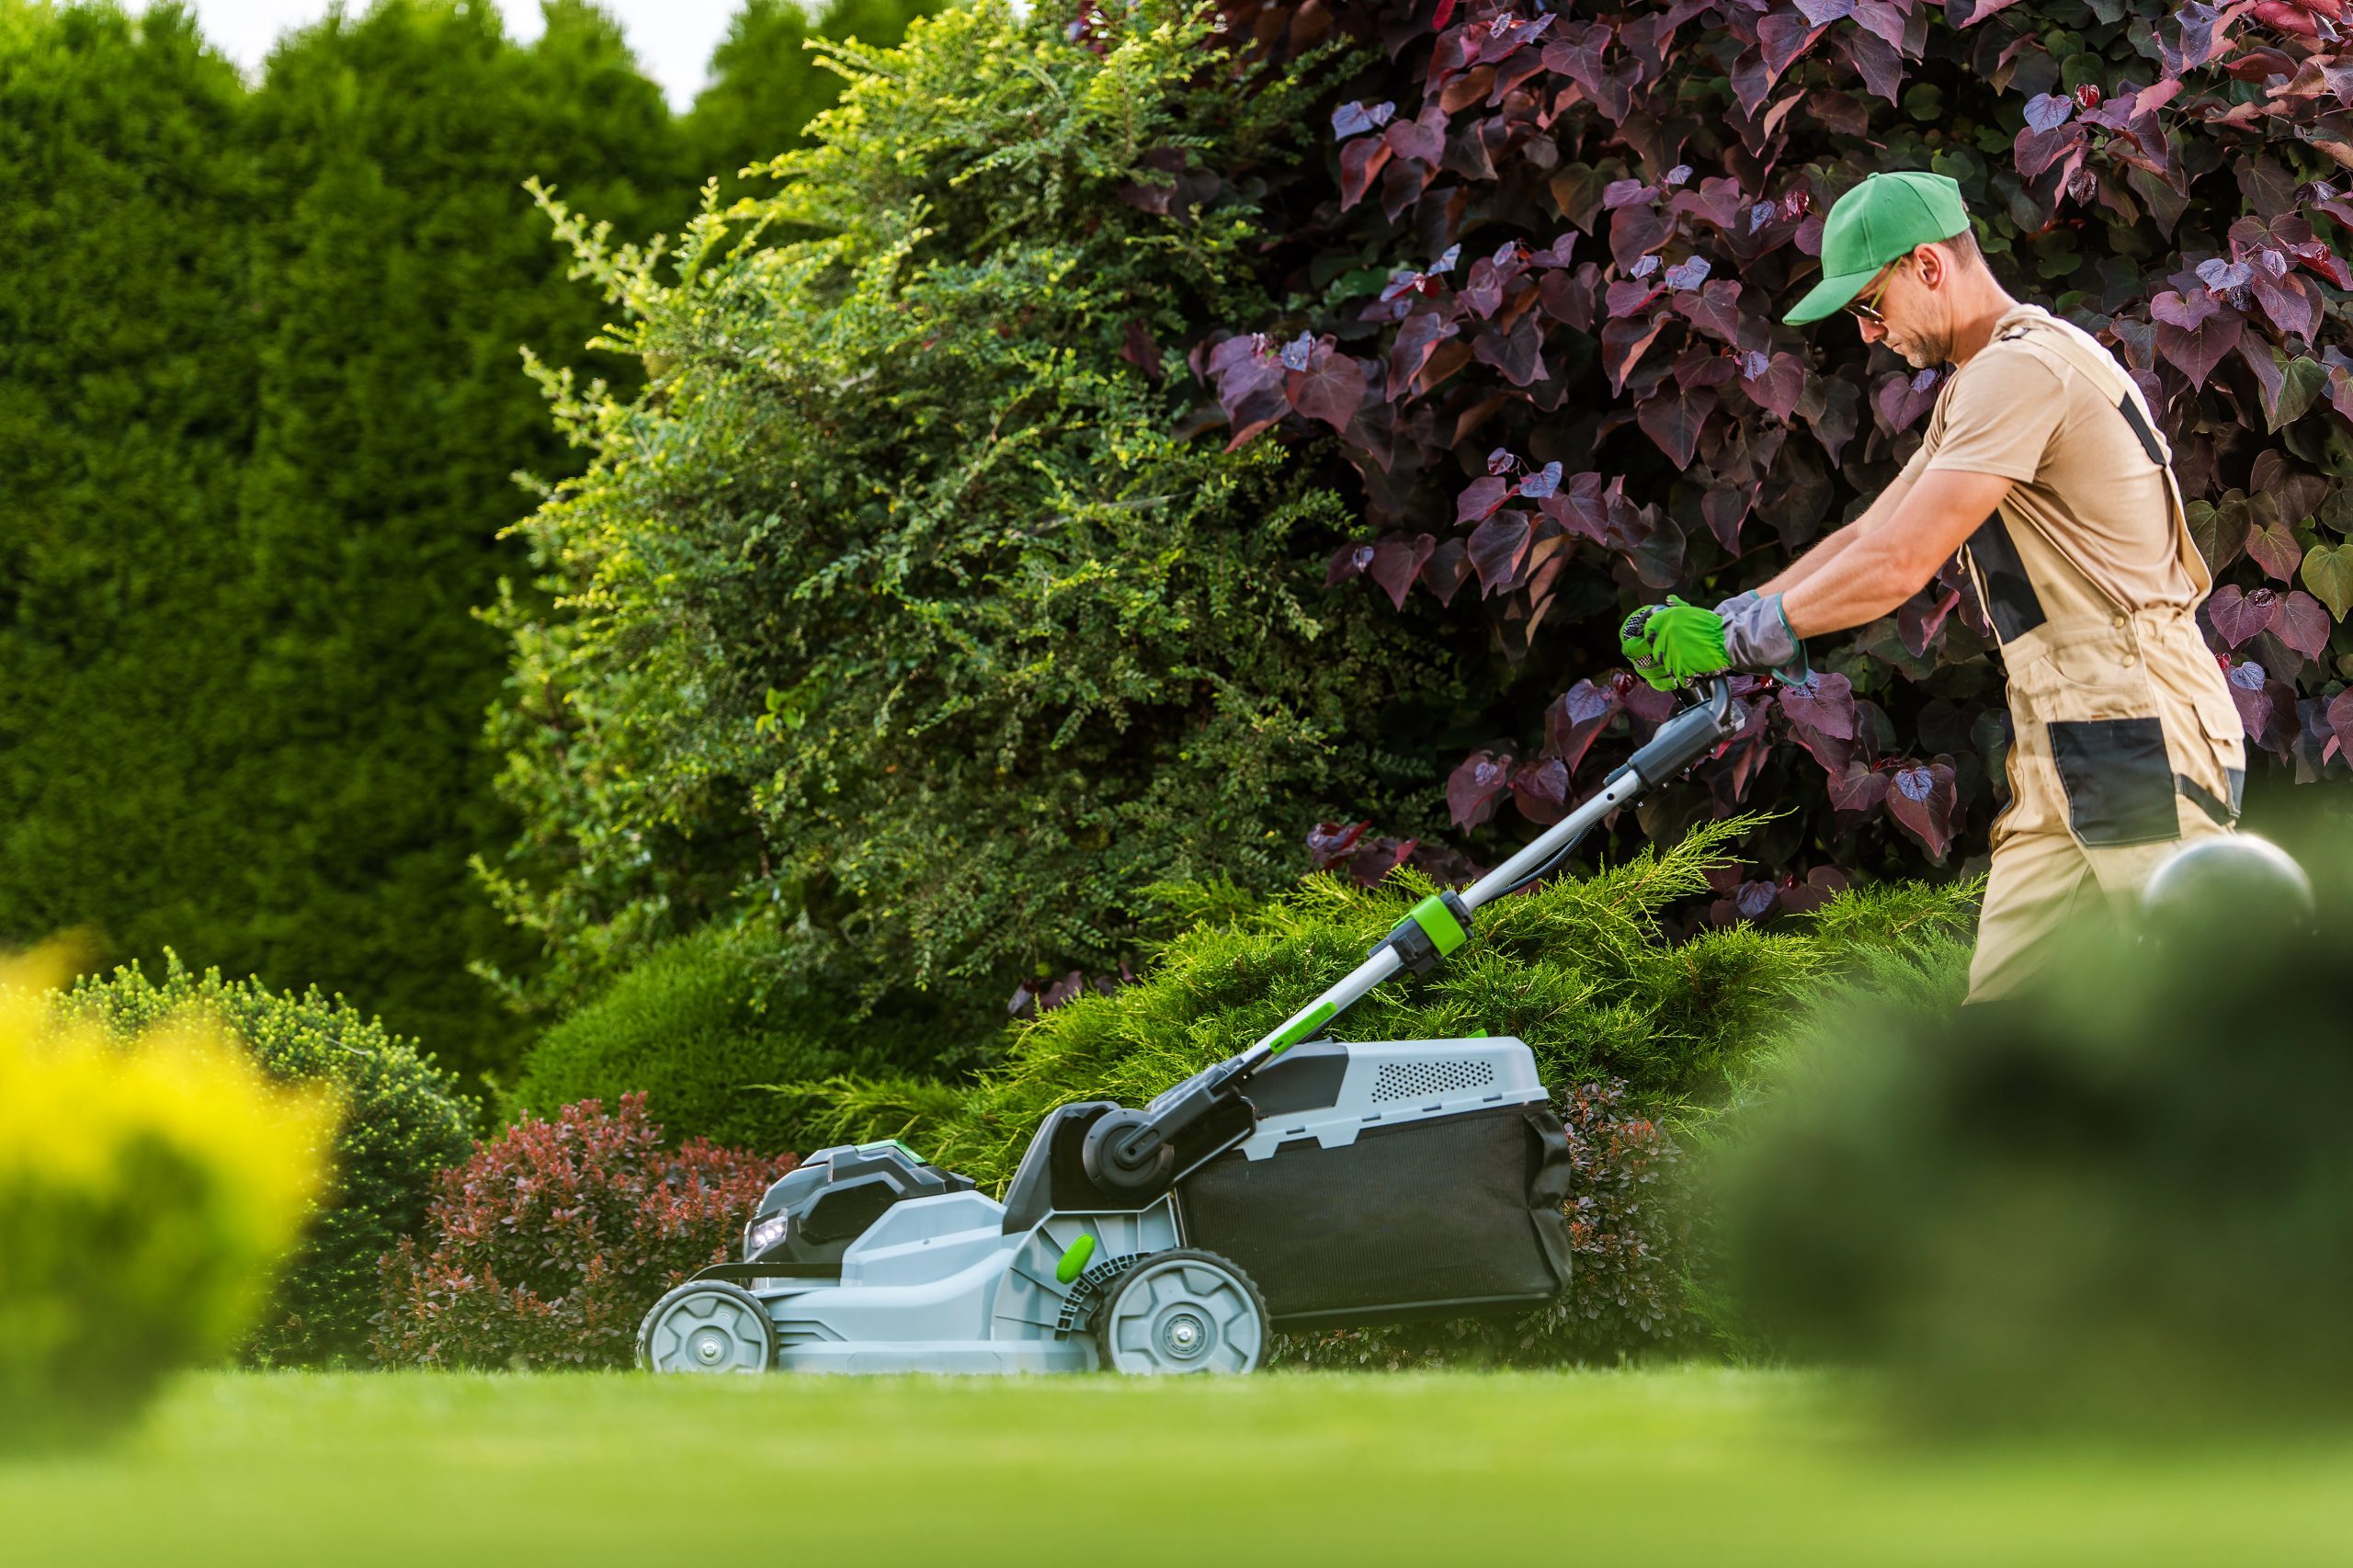 Garden Worker with lawn mower cutting residential grass